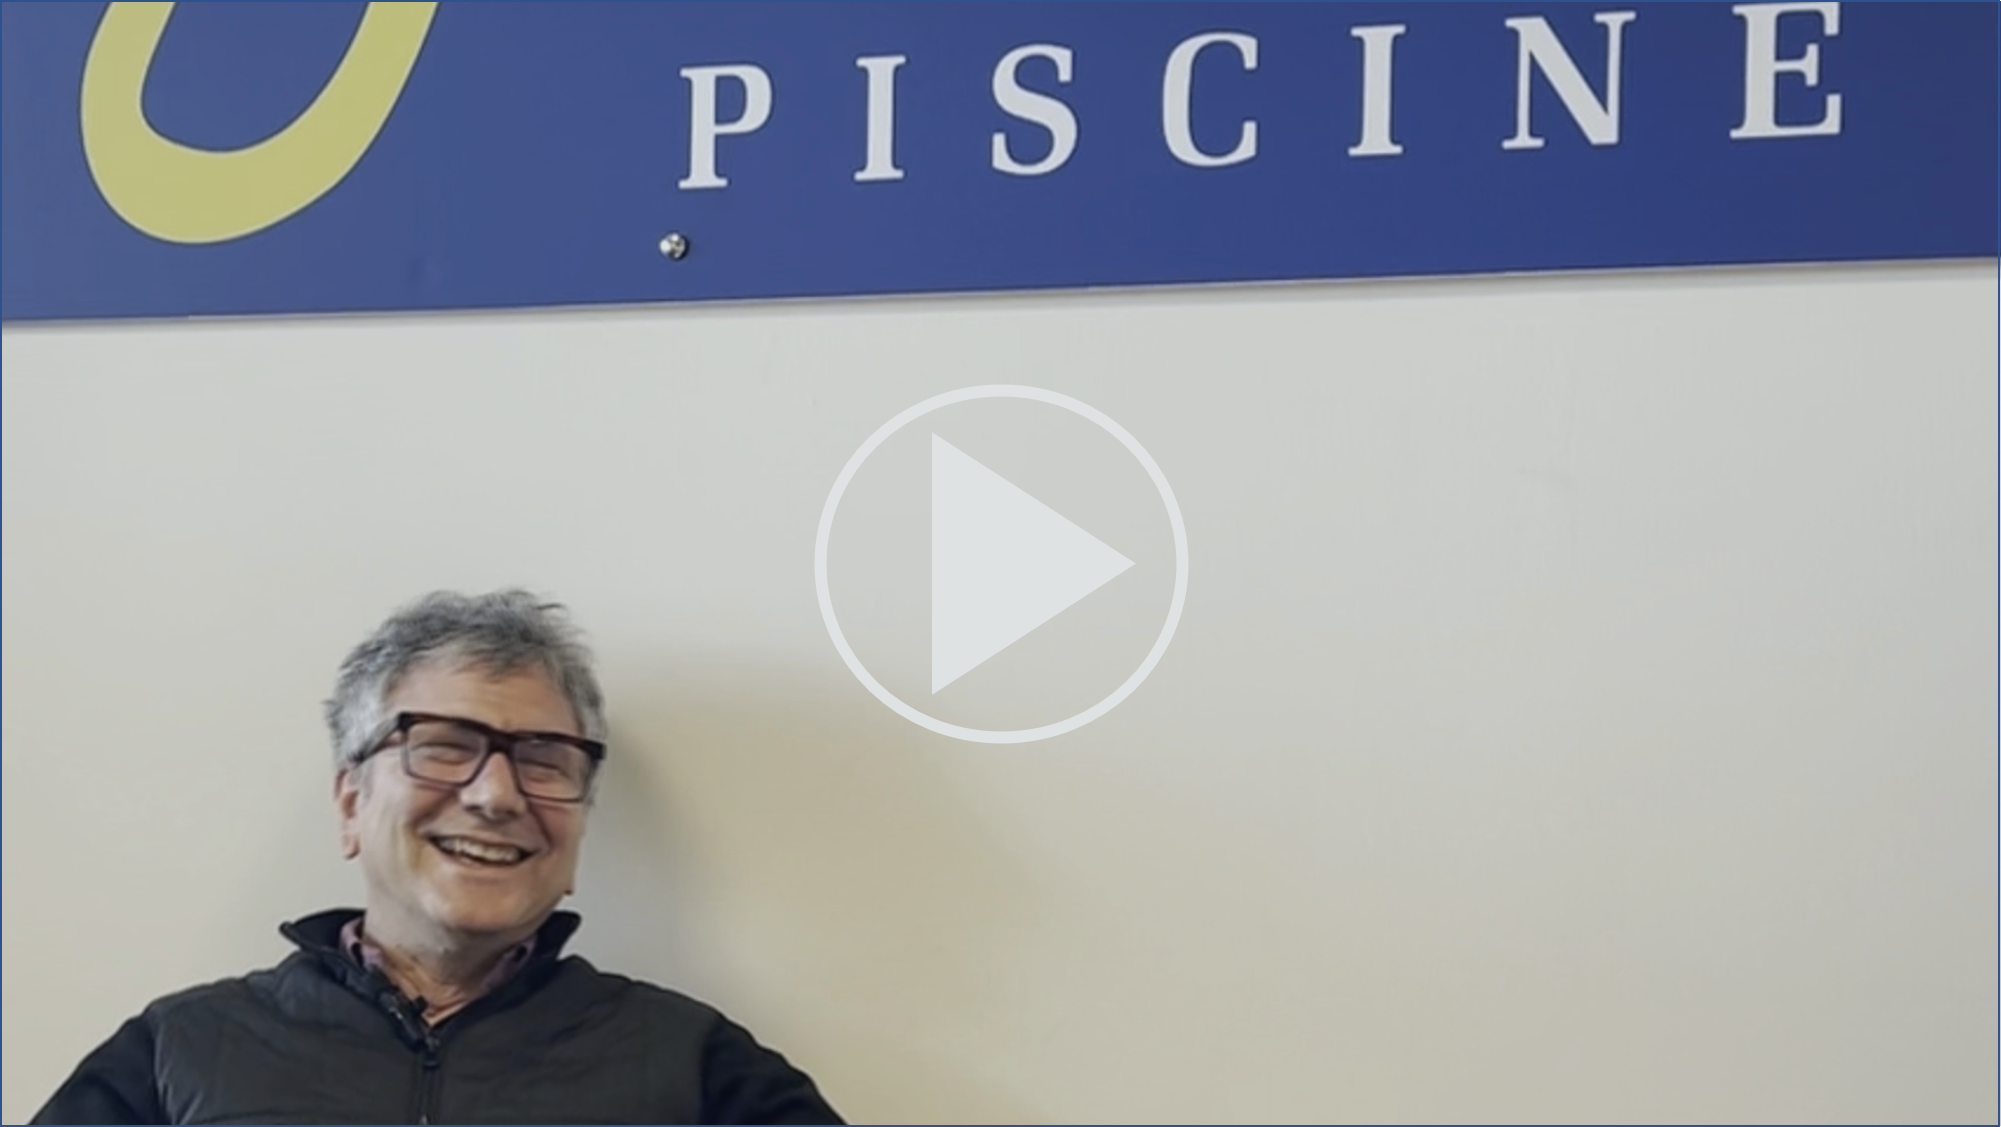 Piscine Desjoyaux Italia - Domenico De Gaetano Intervista